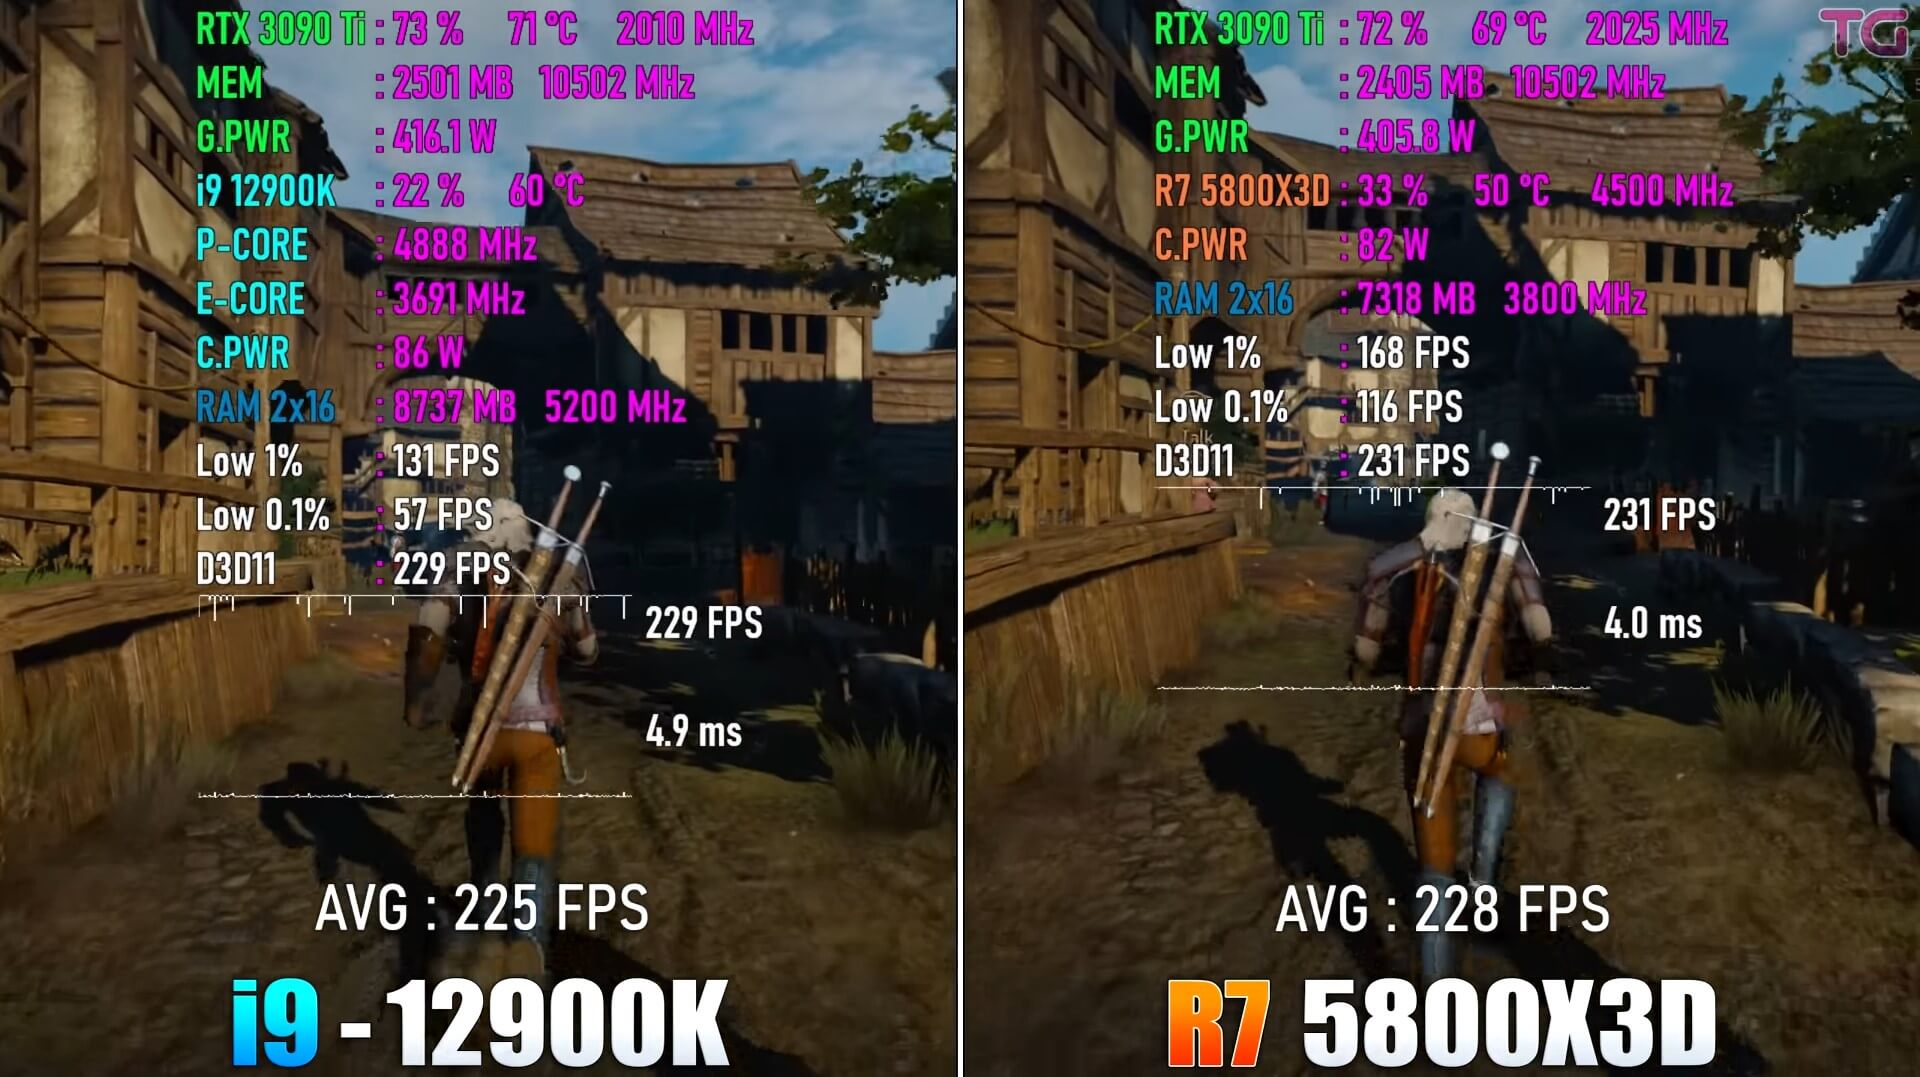 Witcher 3 performance for i9-12900K vs Ryzen 7-5800X3D